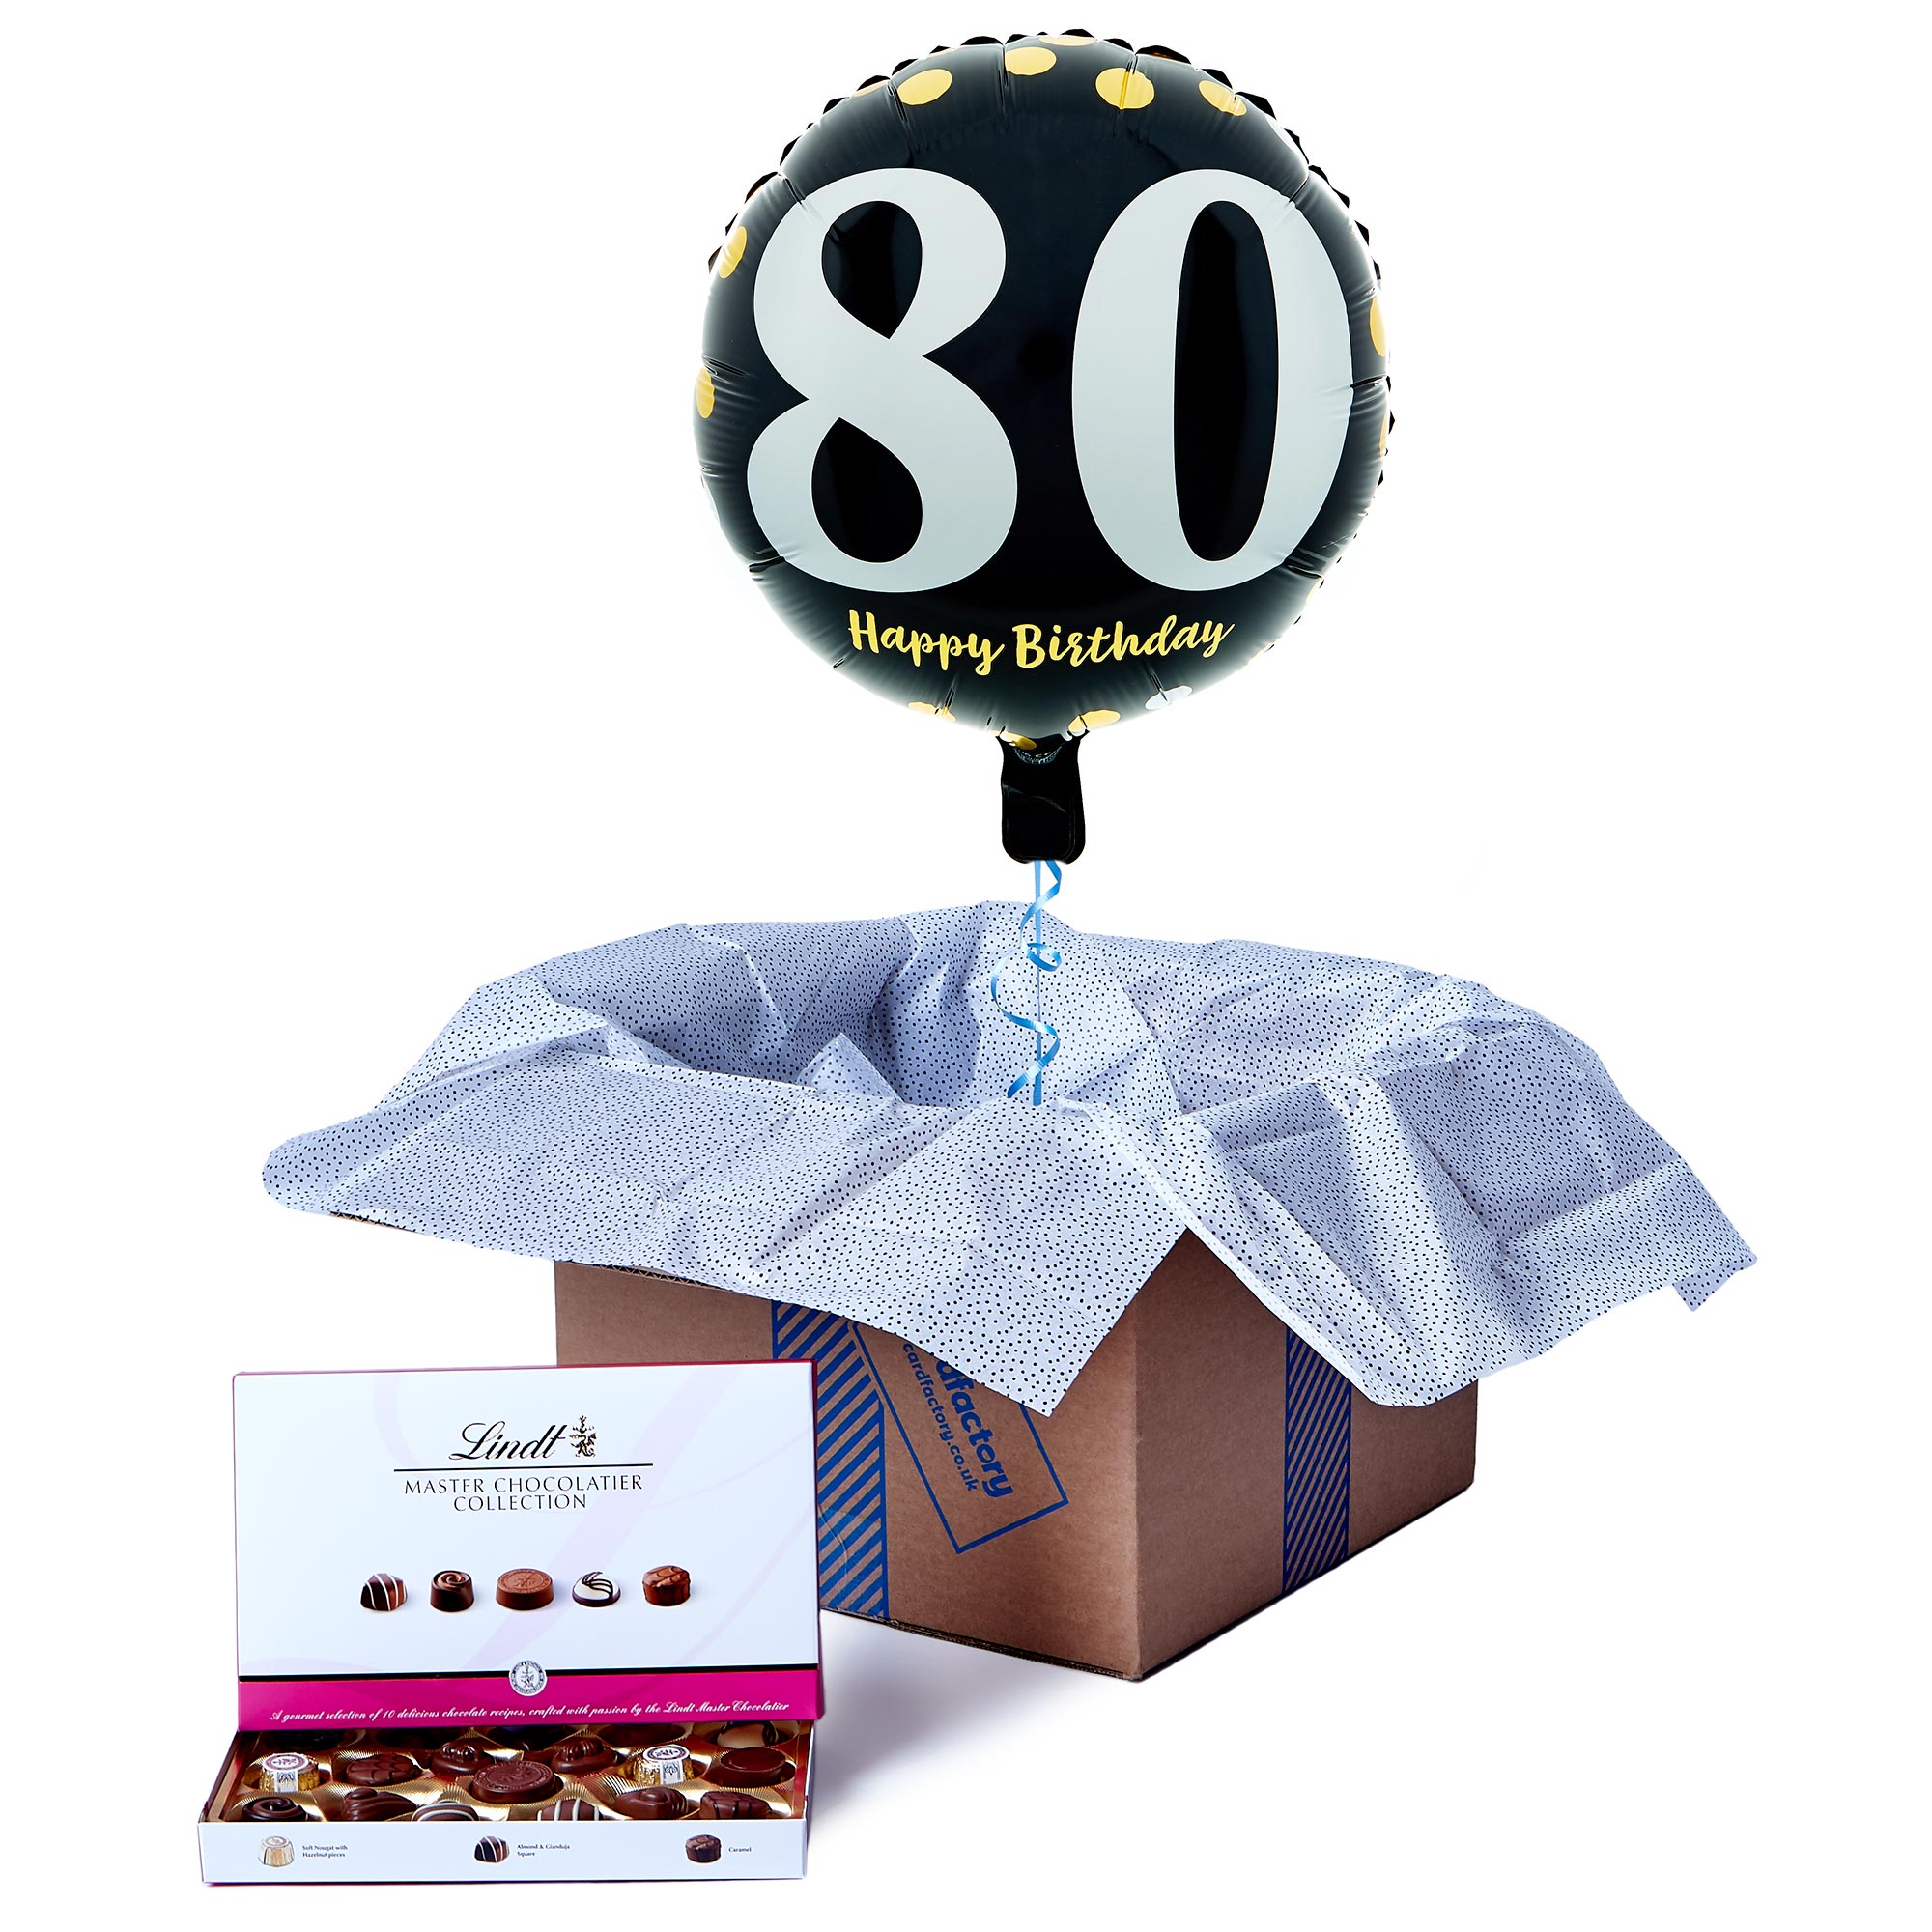 Happy 80th Birthday Balloon & Lindt Chocolate Box - FREE GIFT CARD!